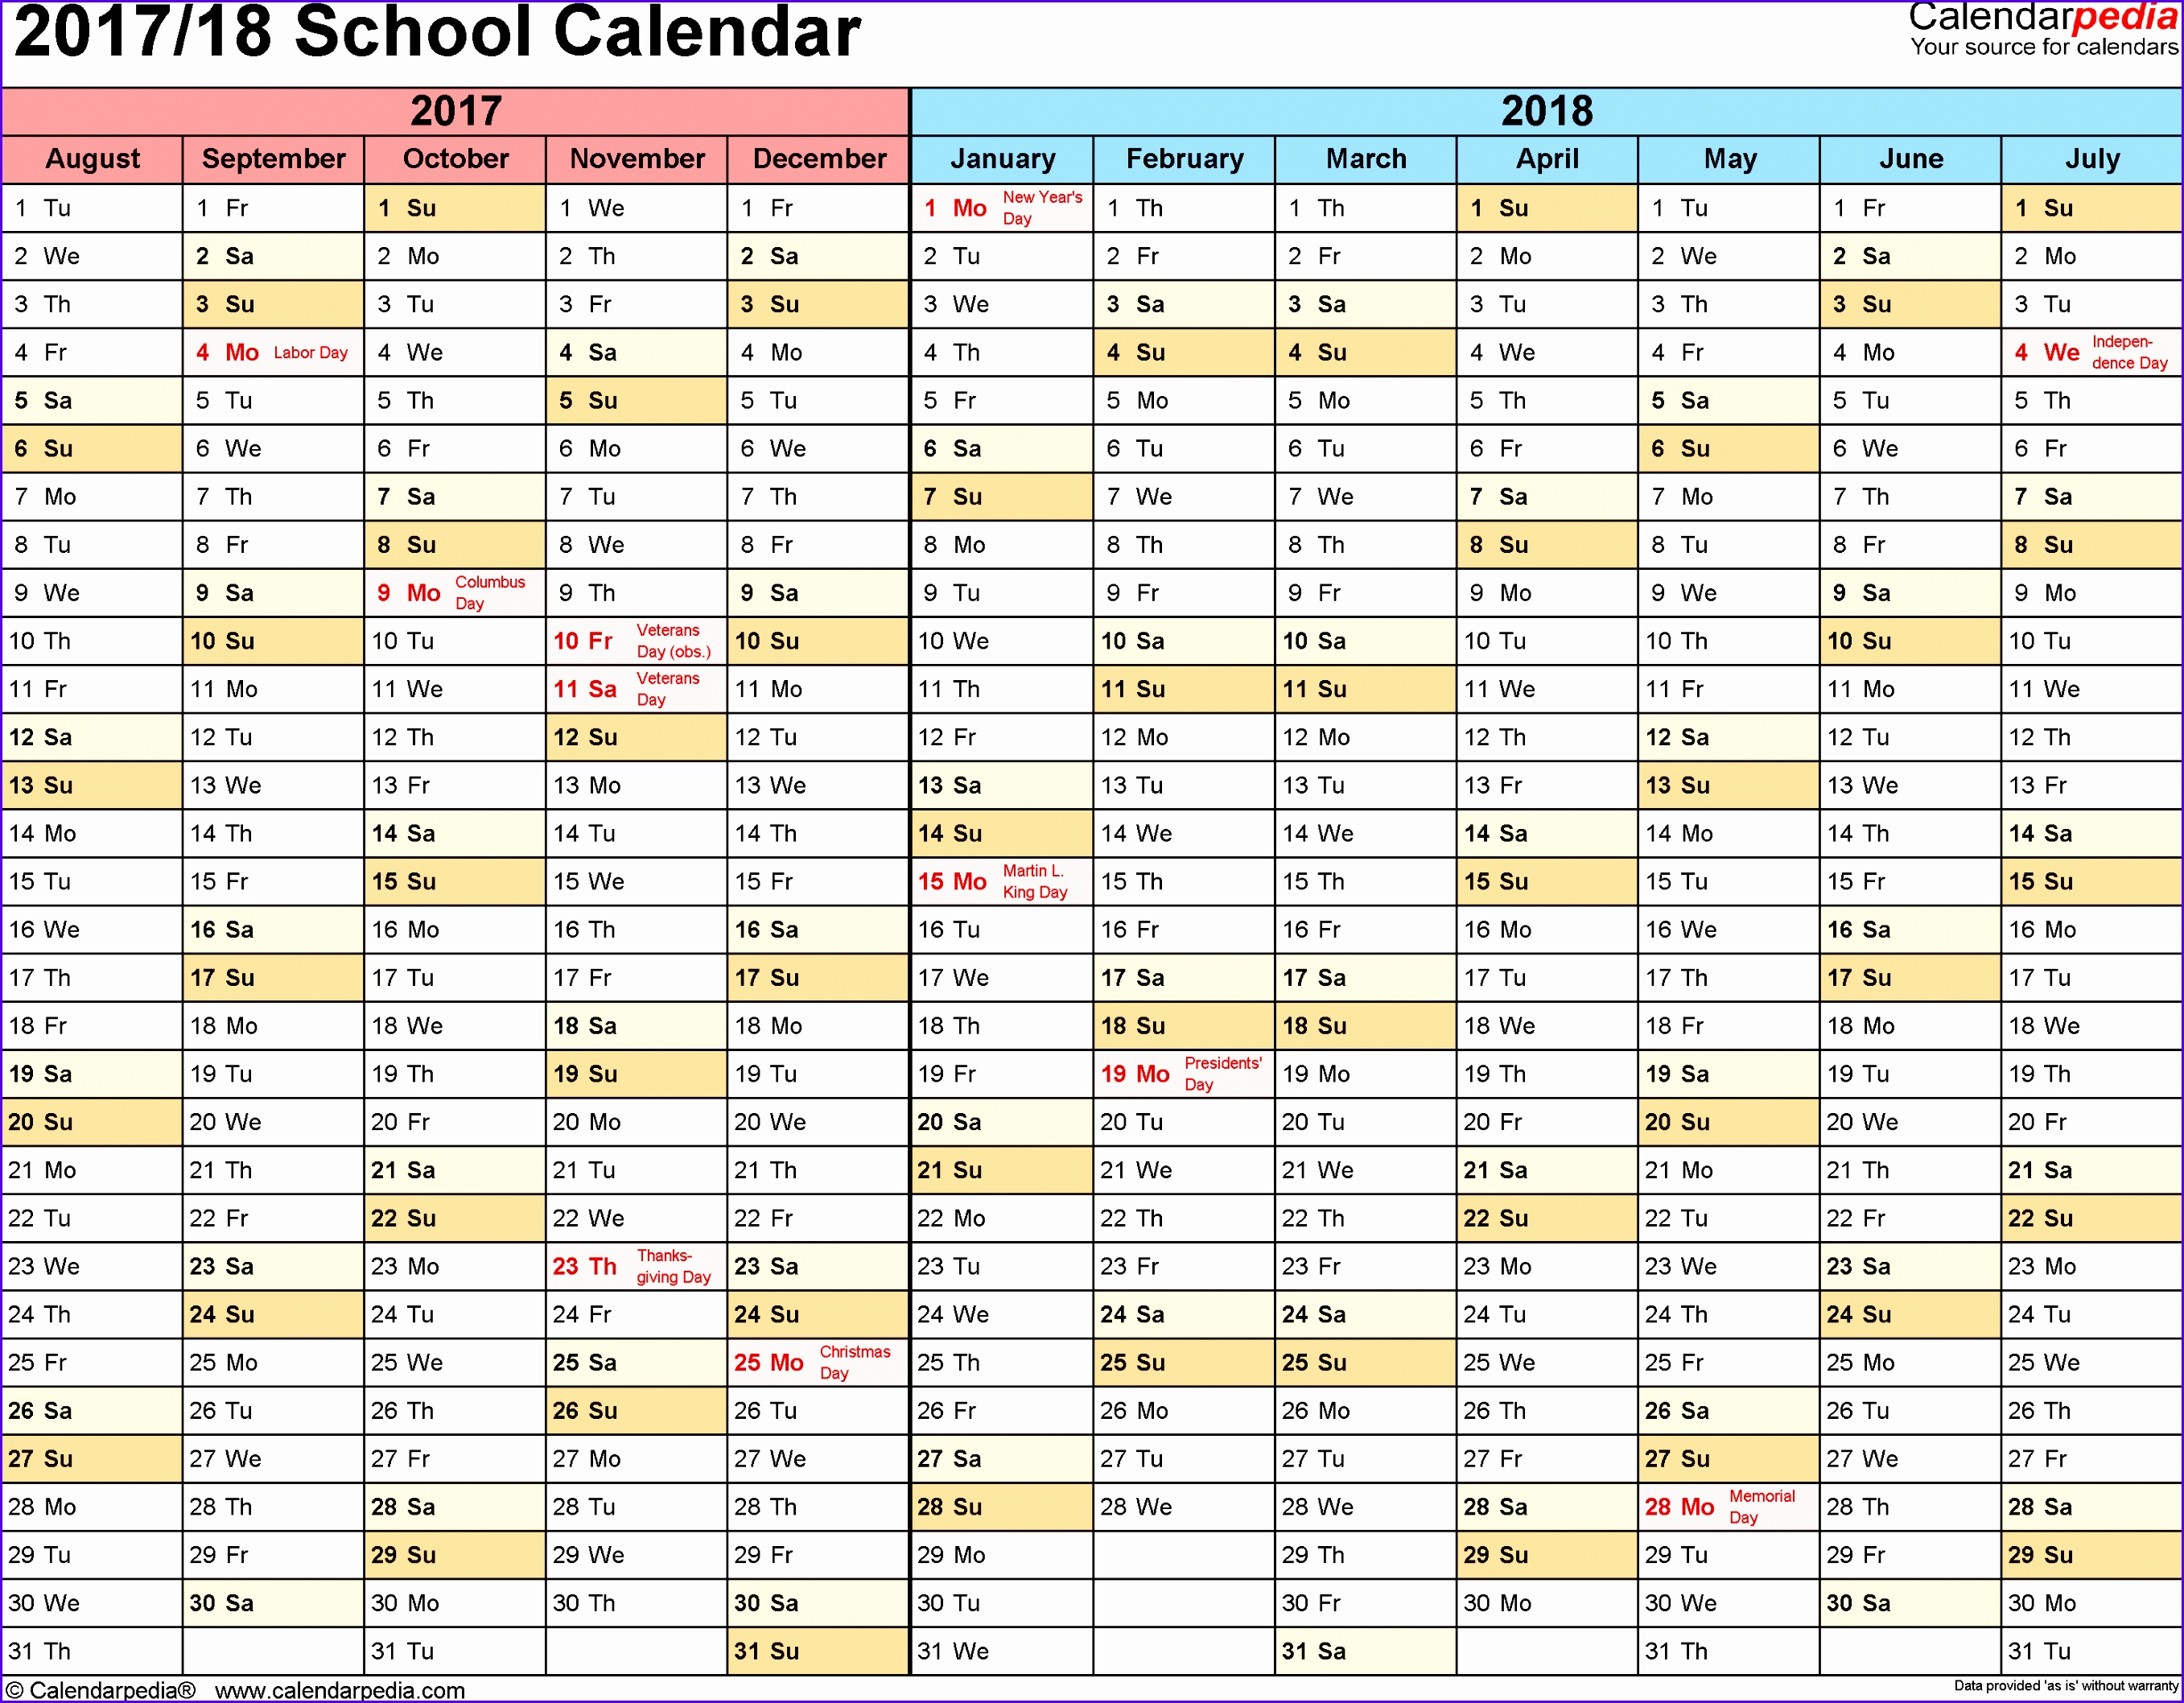 Template 1 School calendar 2017 18 for Excel landscape orientation months horizontally 27142116